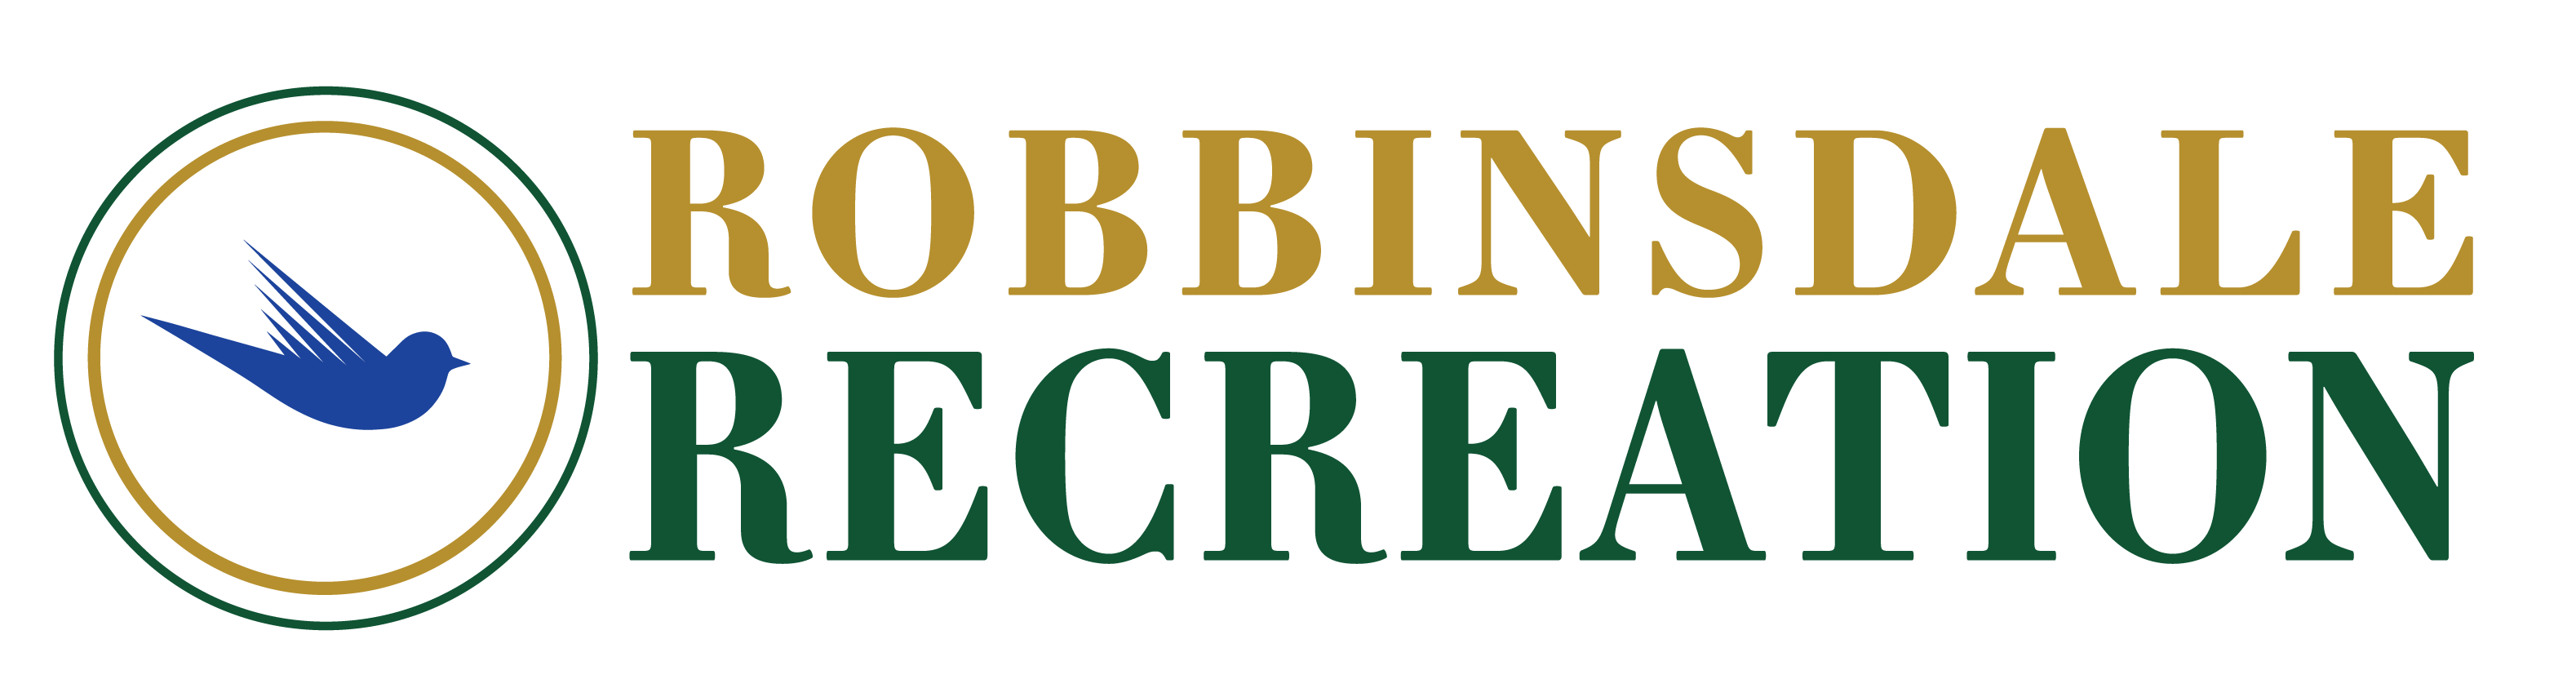 Robbinsdale Recreation Services